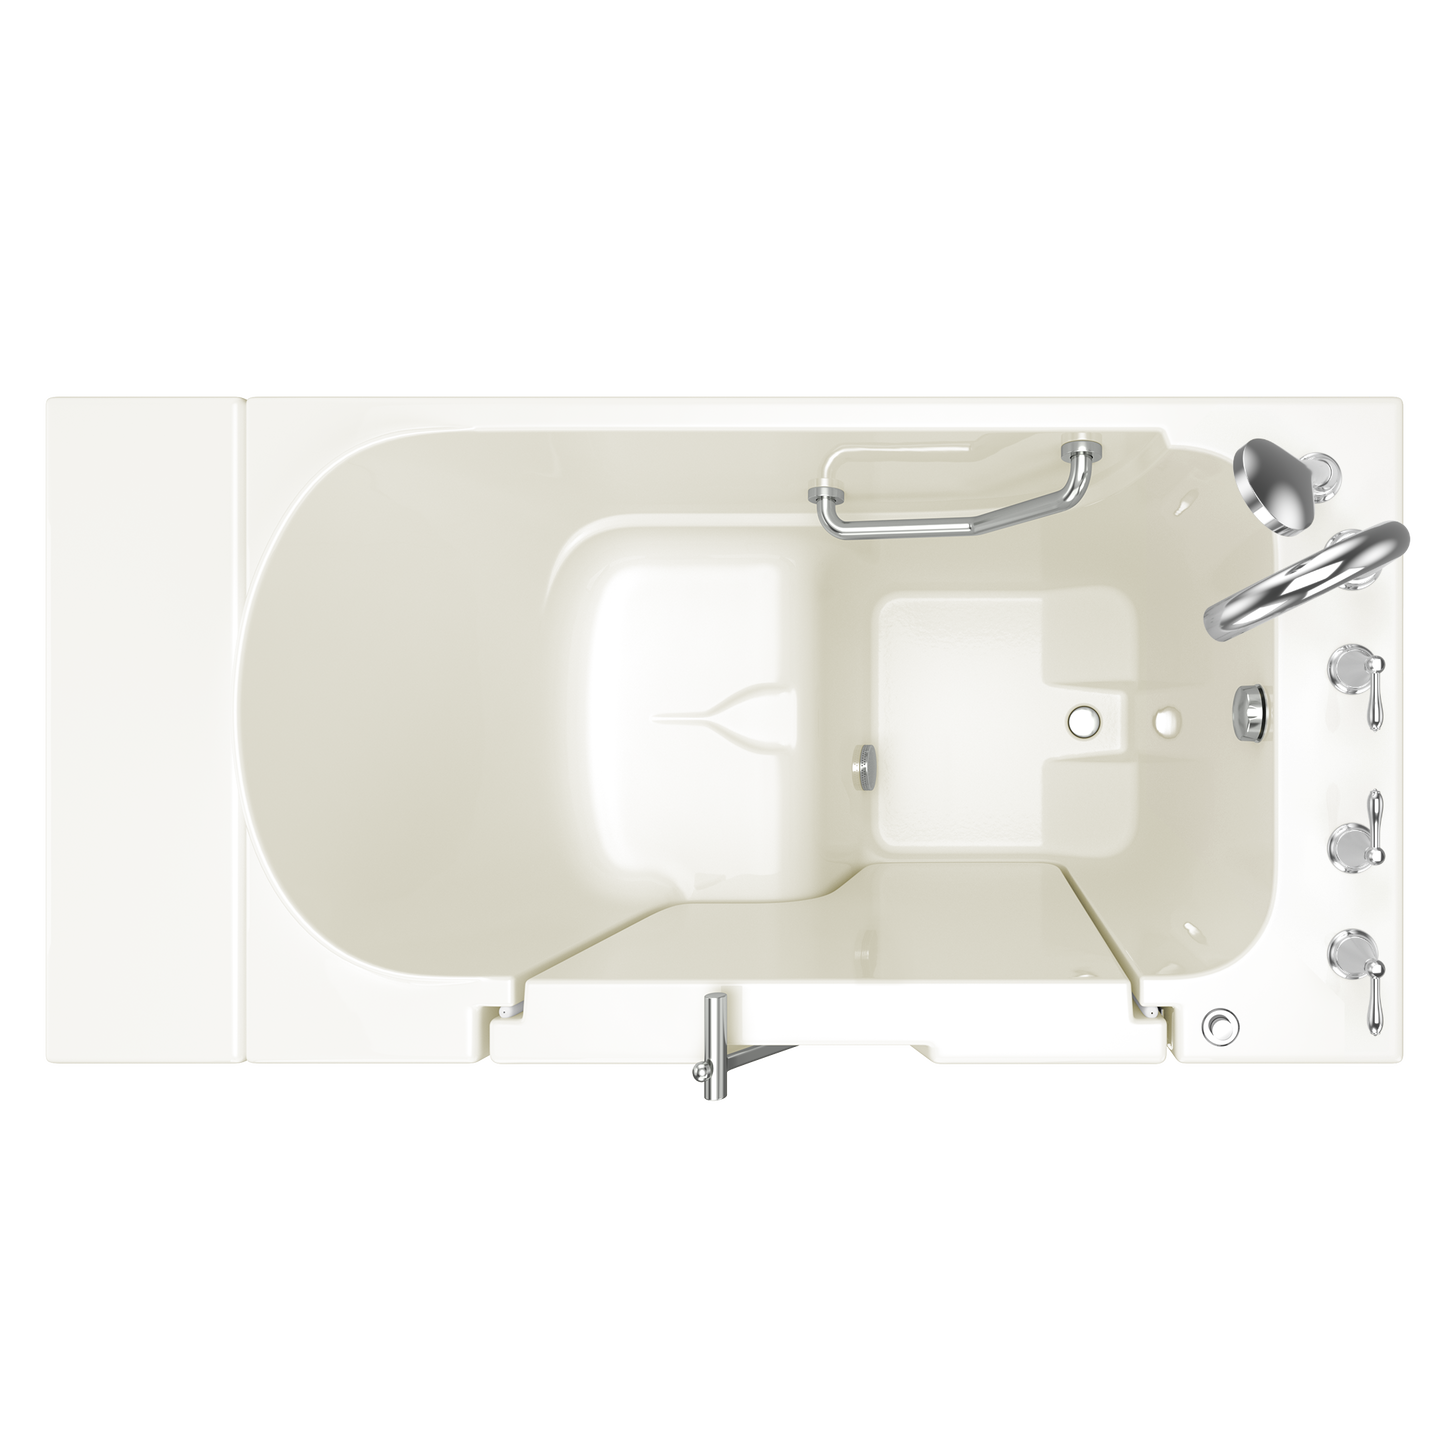 AMERICAN-STANDARD SS9OD5230RS-BC-PC, Gelcoat Premium Series 30 in. x 52 in. Outward Opening Door Walk-In Bathtub in Wib Linen